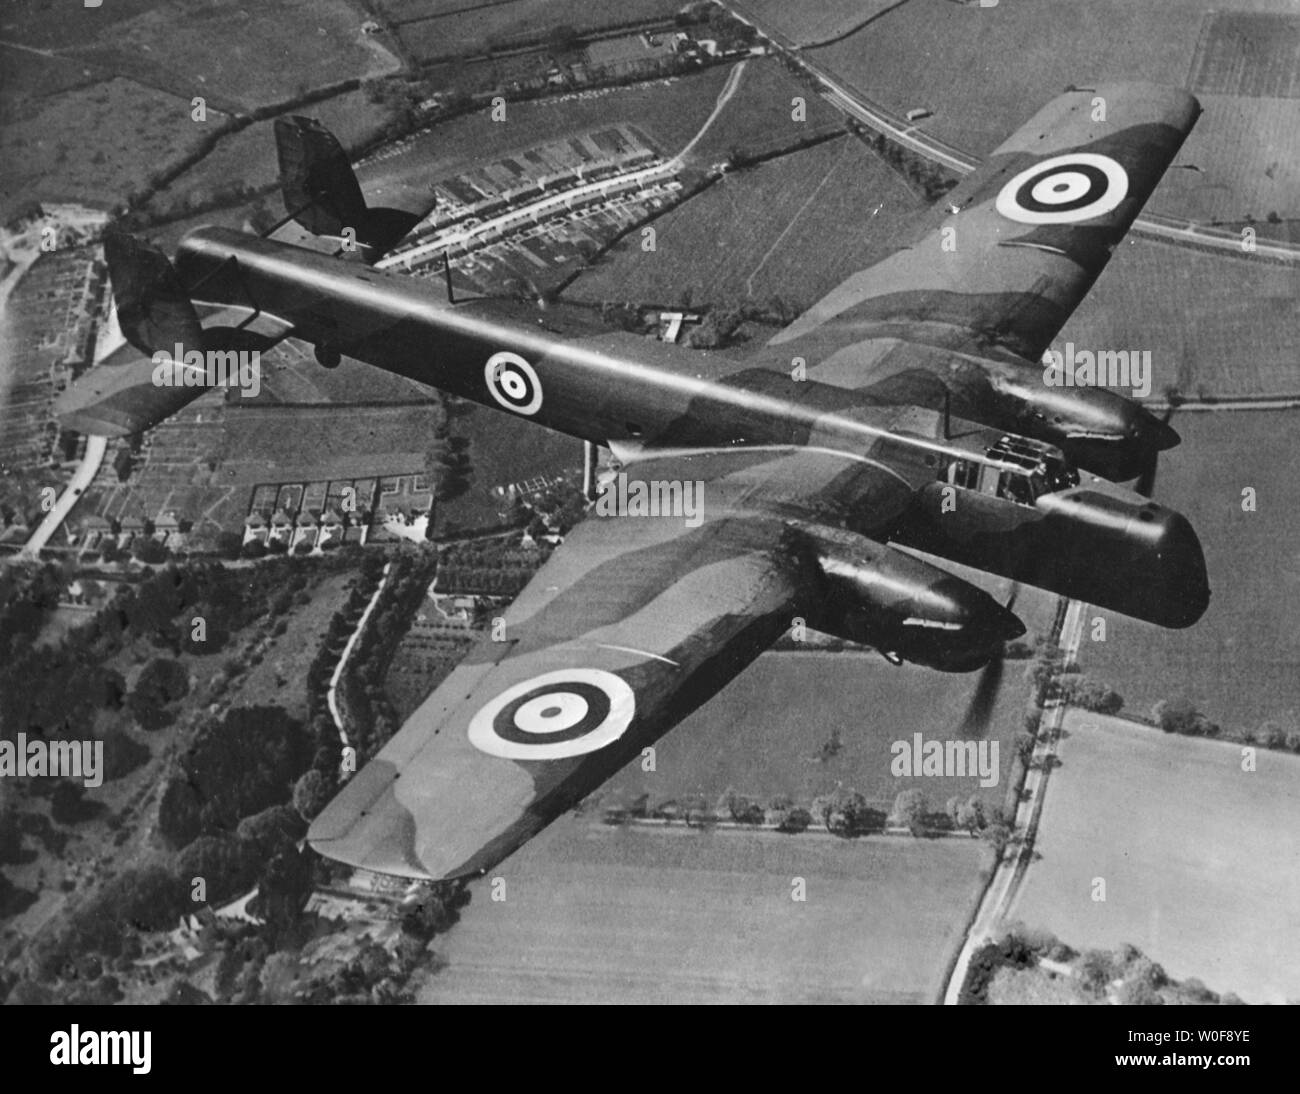 Armstrong Whitley bomber aircraft Stock Photo